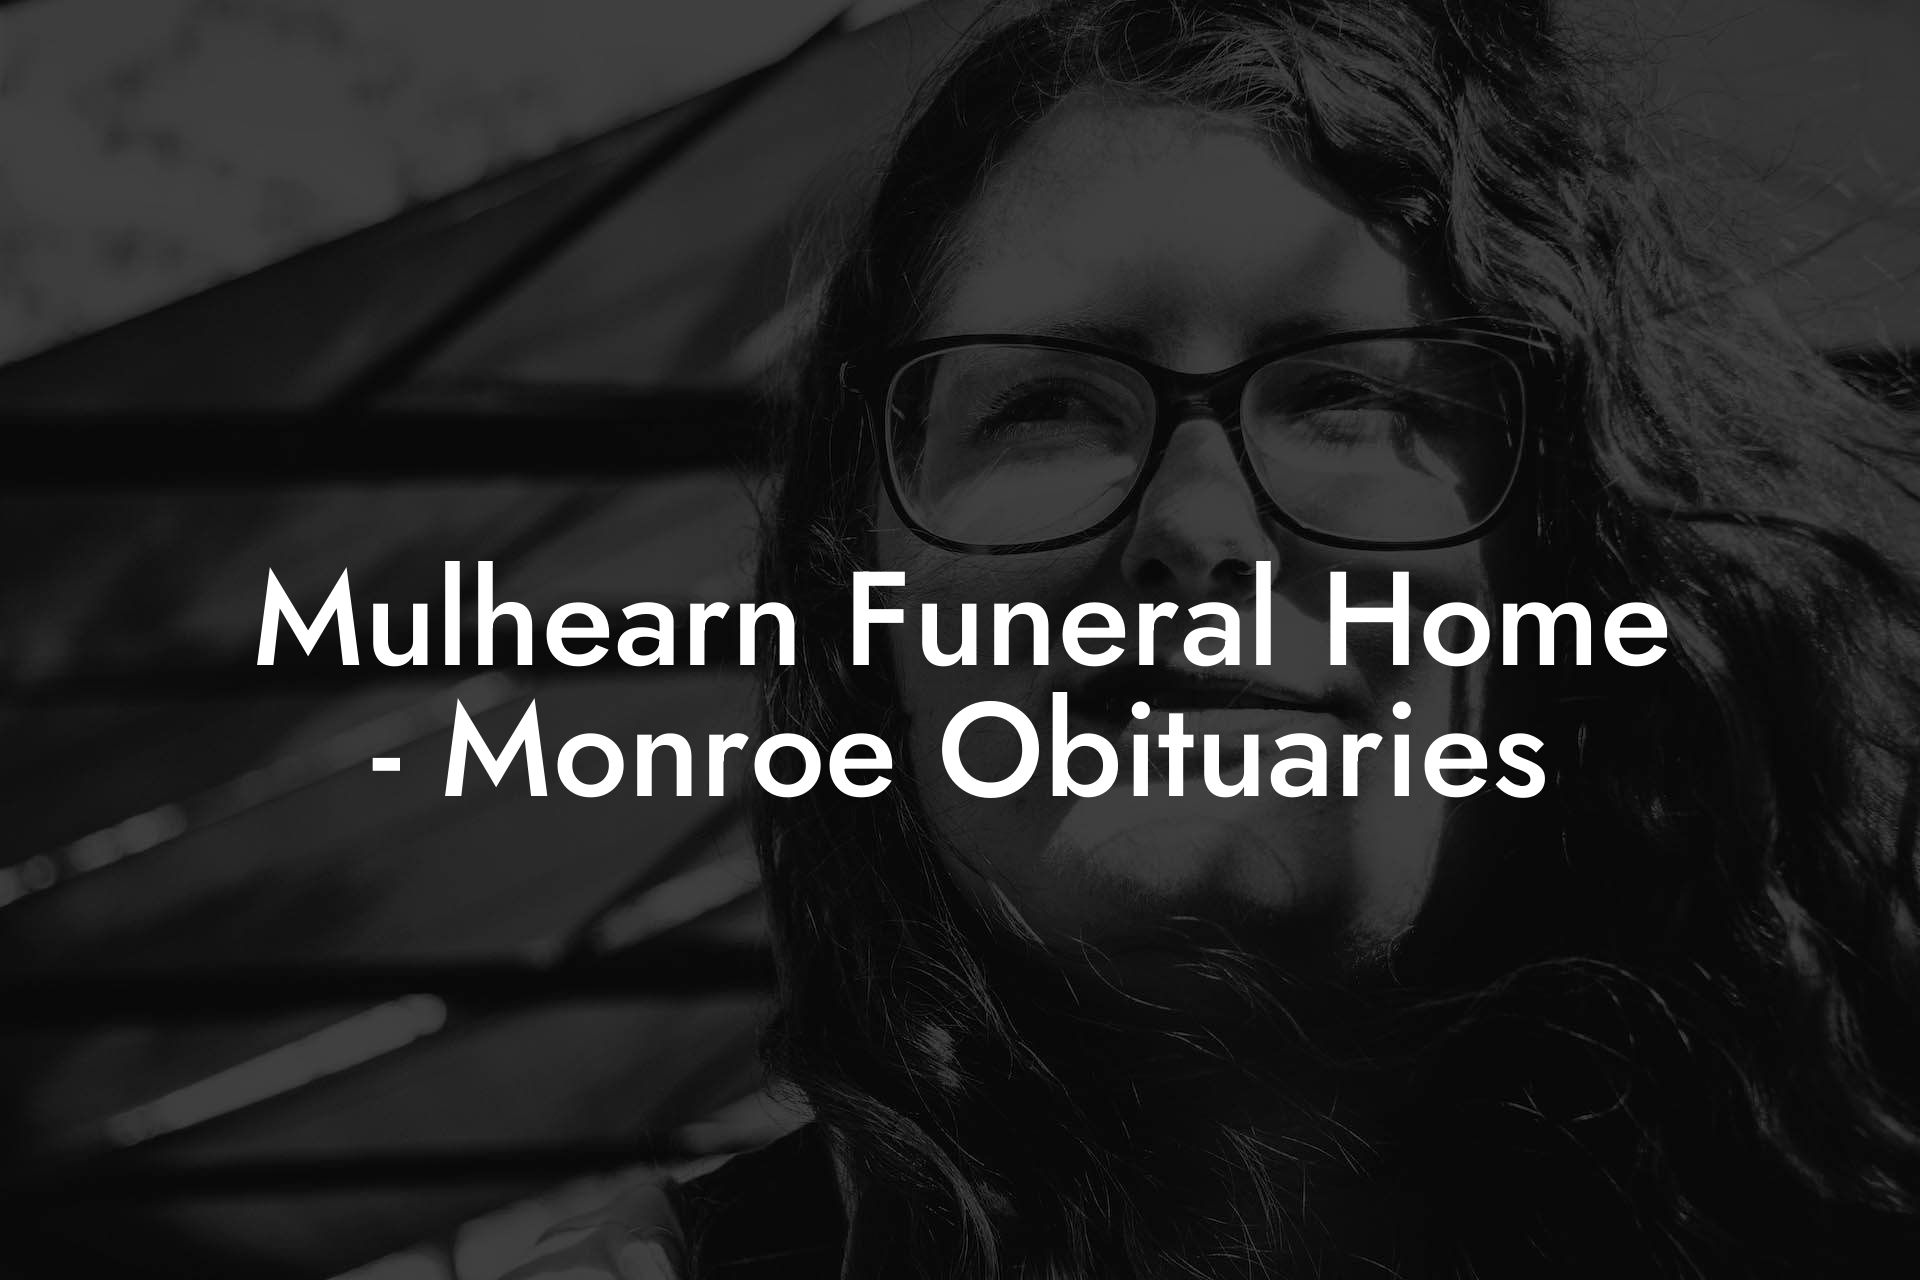 Mulhearn Funeral Home - Monroe Obituaries